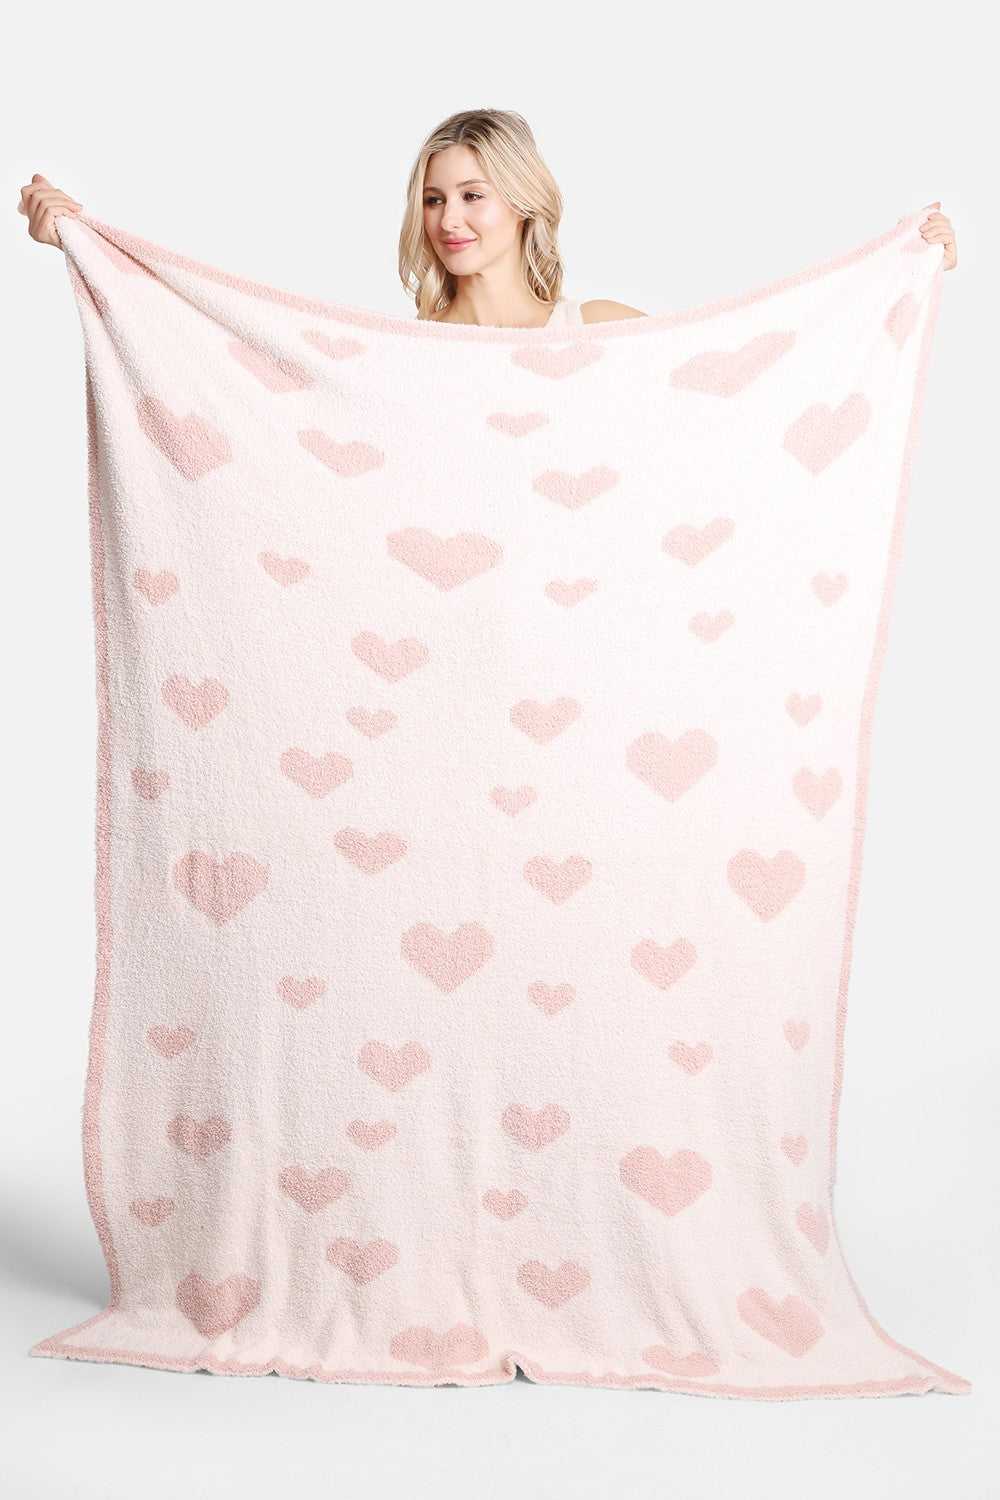 Heart Patterned Reversible Blanket